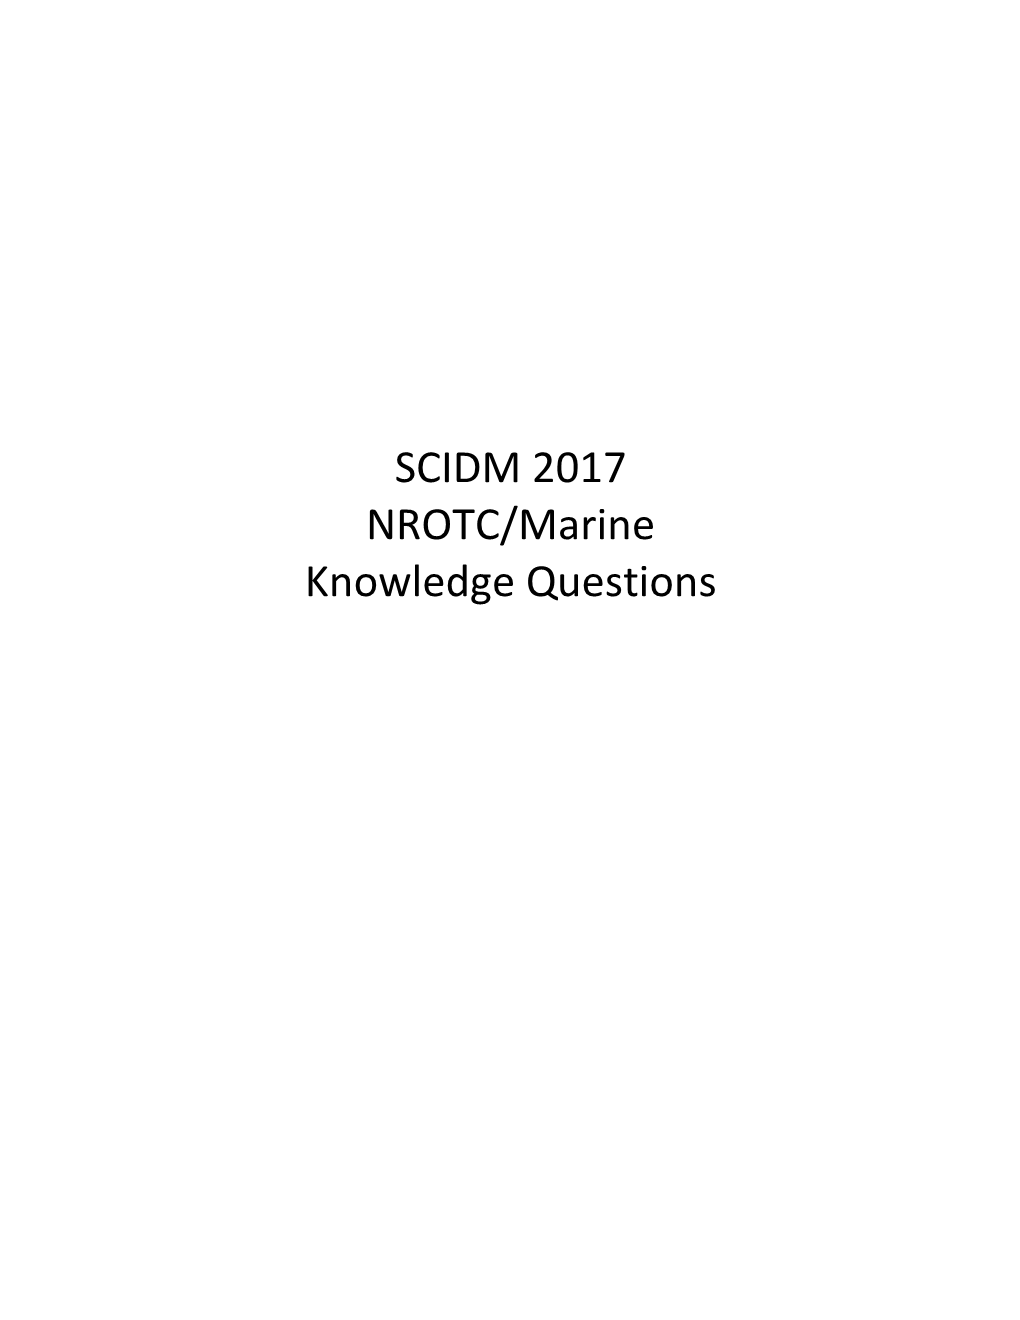 SCIDM 2017 NROTC/Marine Knowledge Questions